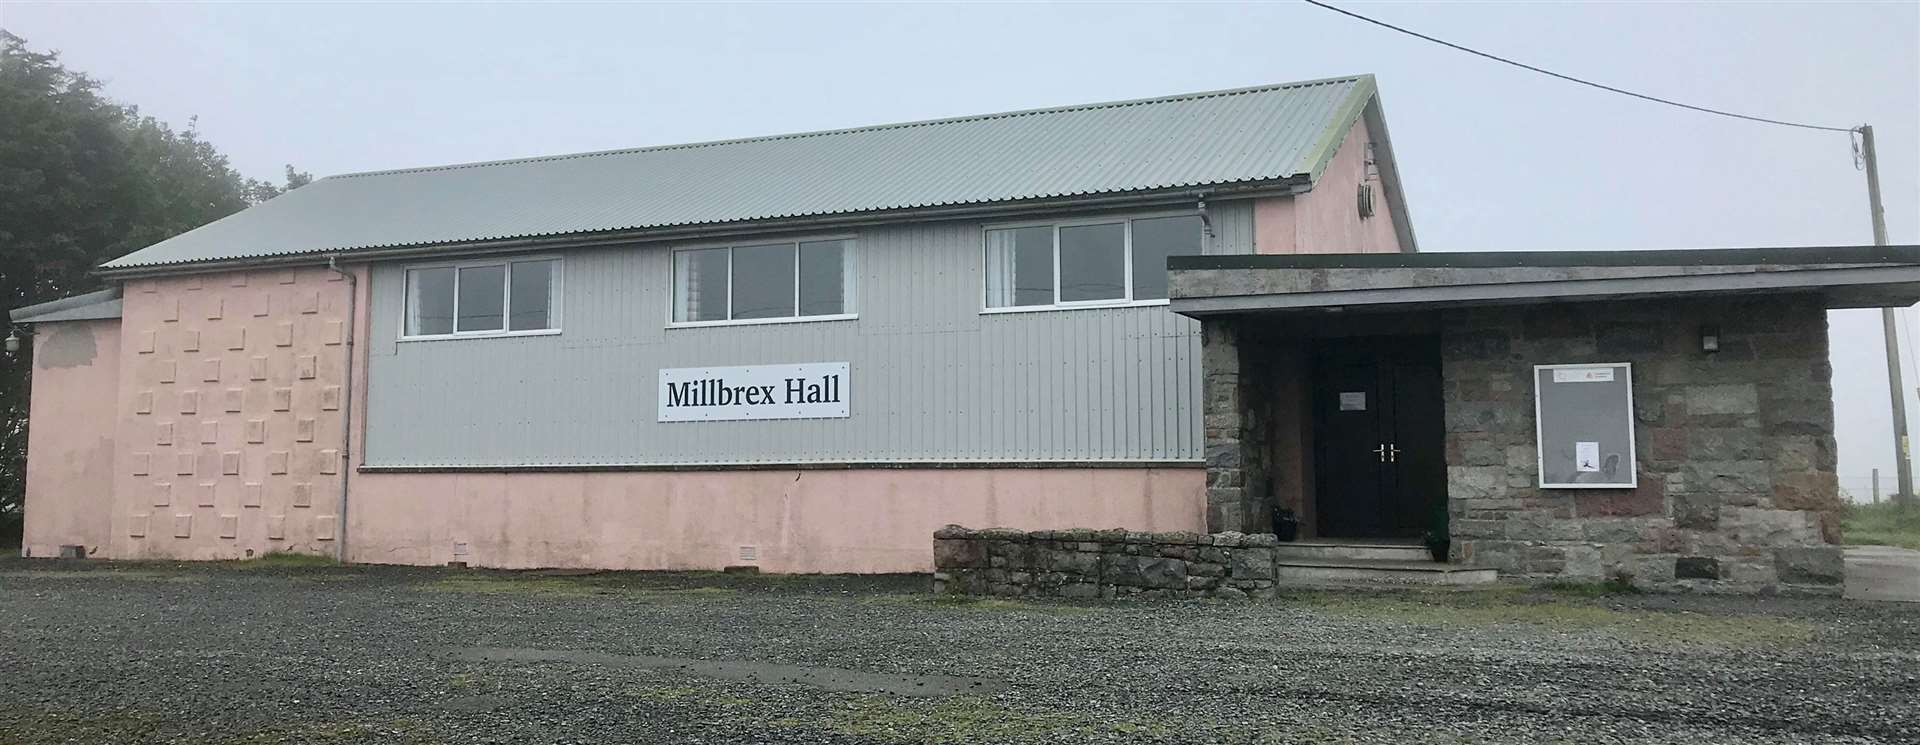 The Millbrex Hall